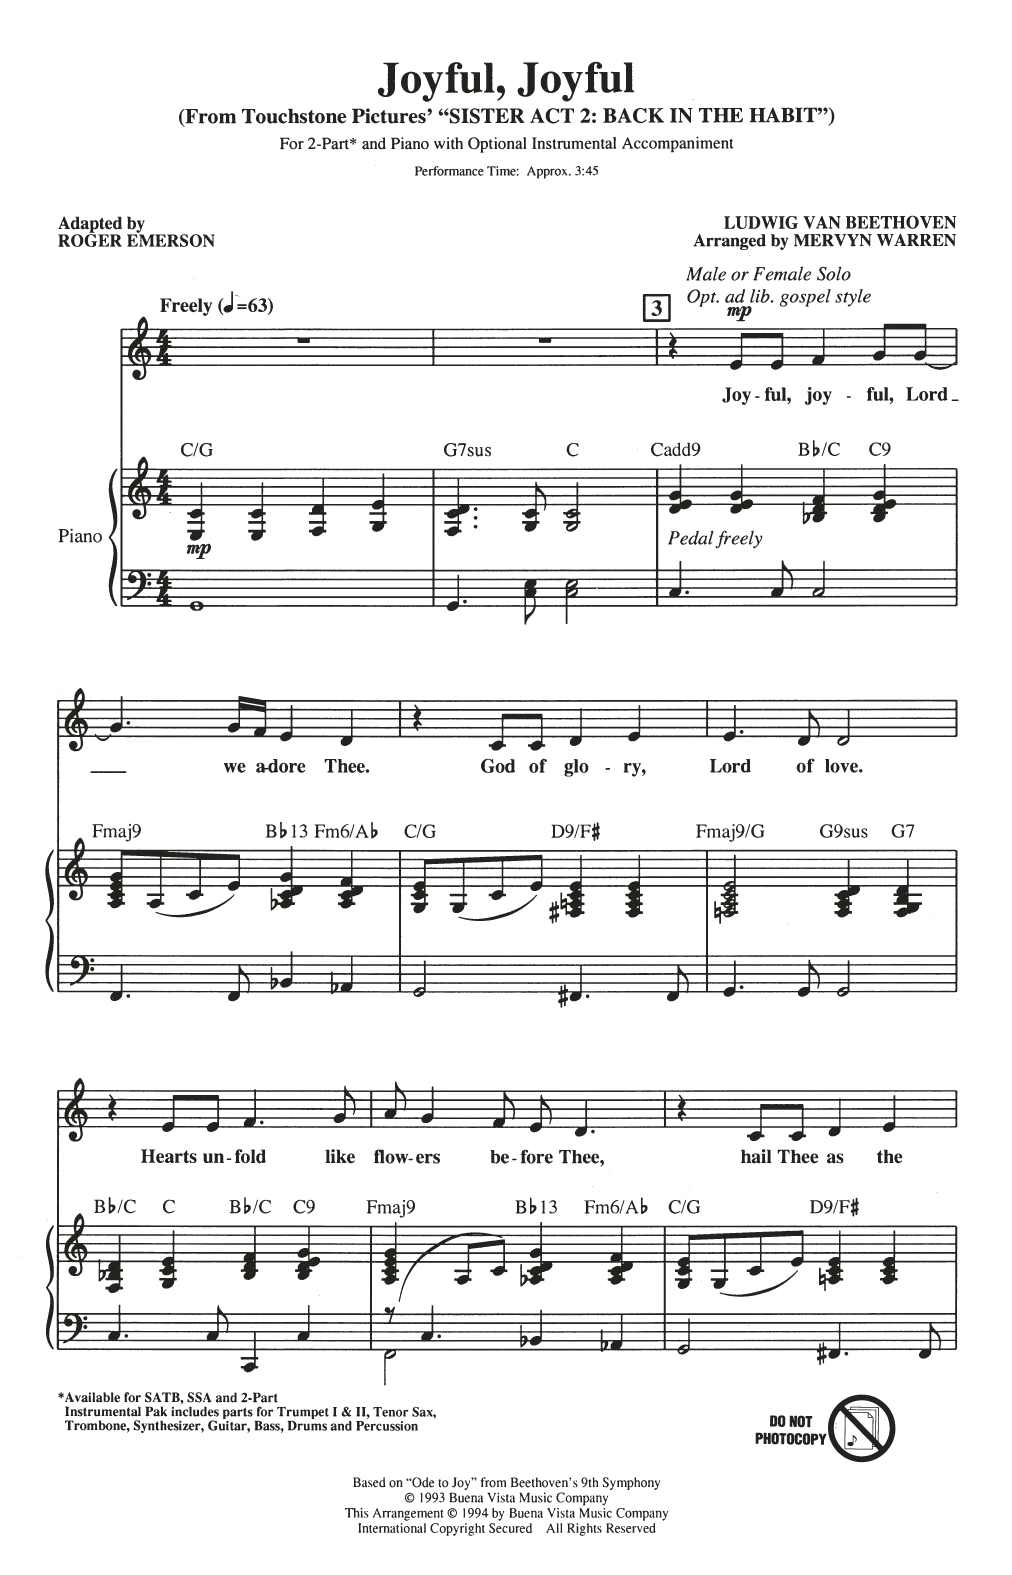 Download Mervyn Warren Joyful, Joyful (from Sister Act 2) (arr. Roger Emerson) Sheet Music and learn how to play 3-Part Mixed Choir PDF digital score in minutes